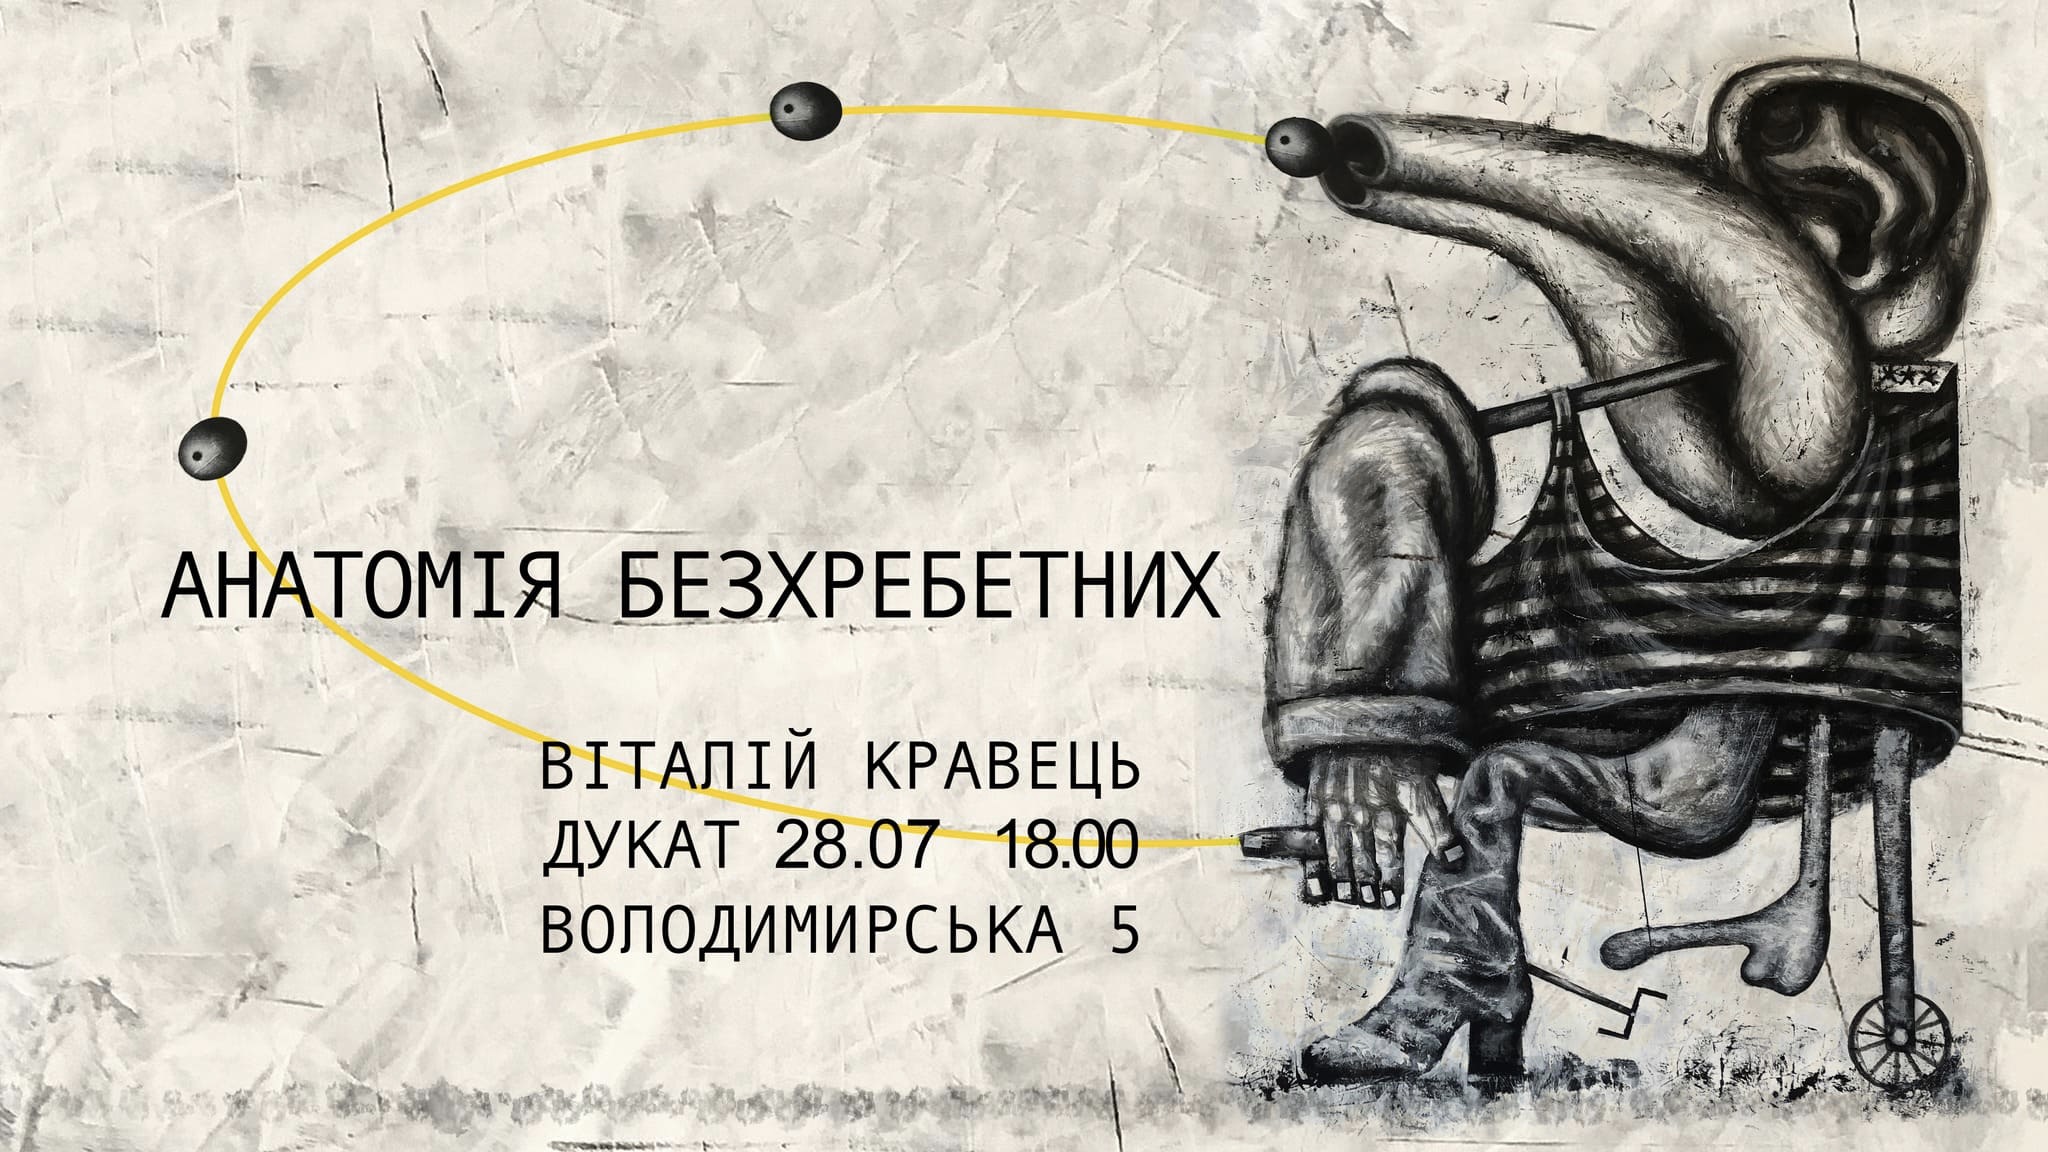 Выставка работ Виталия Кравца "Анатомия бесхребетных"